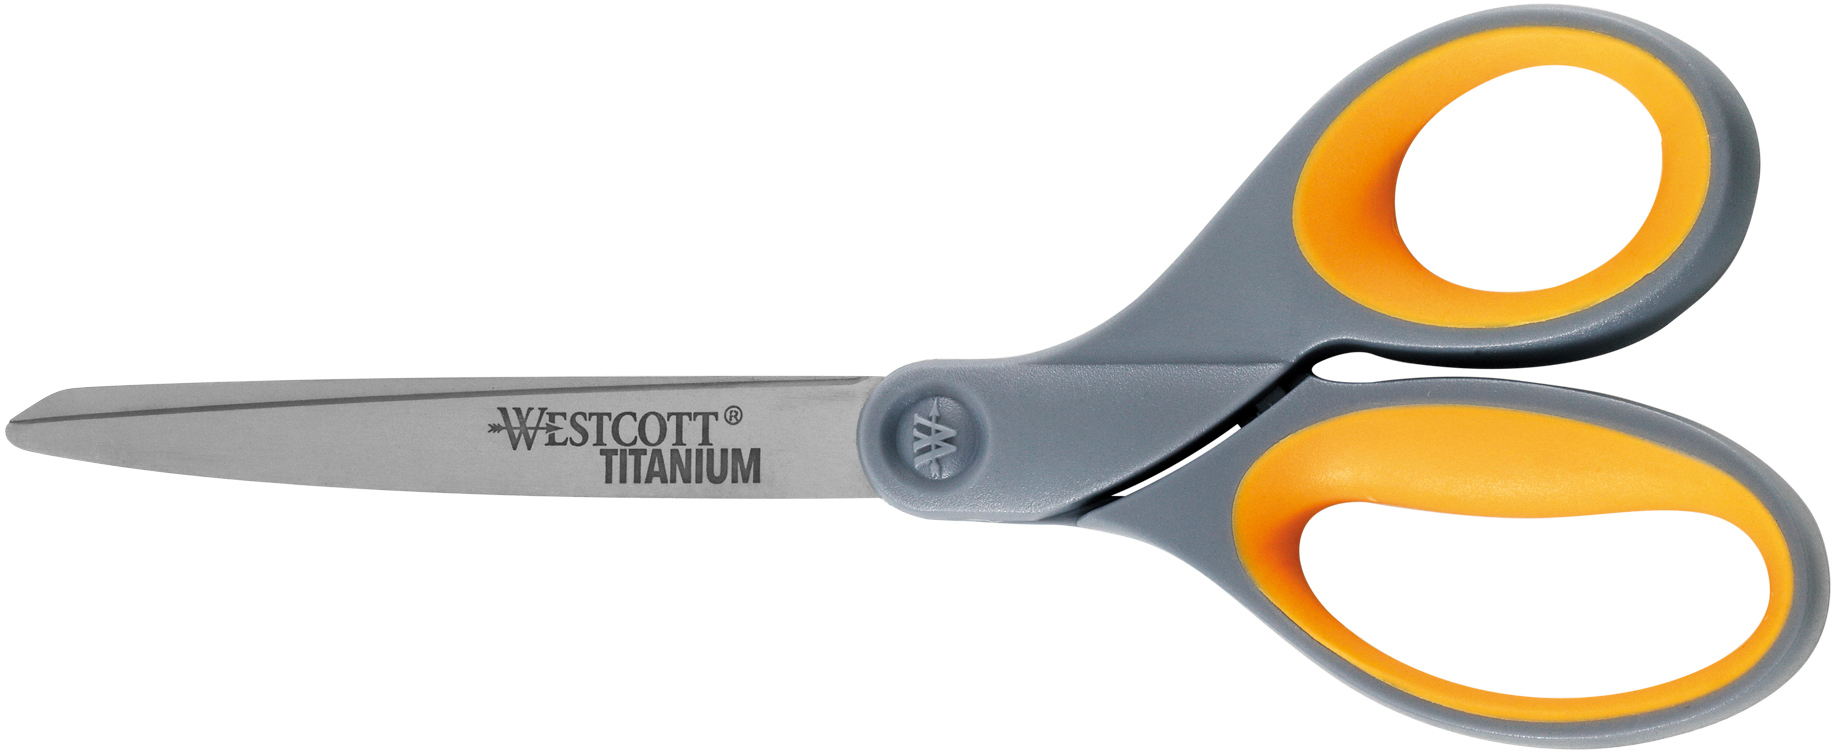 WESTCOTT Ciseau Softgrip Titan 23cm E-30493 00 gris/jaune